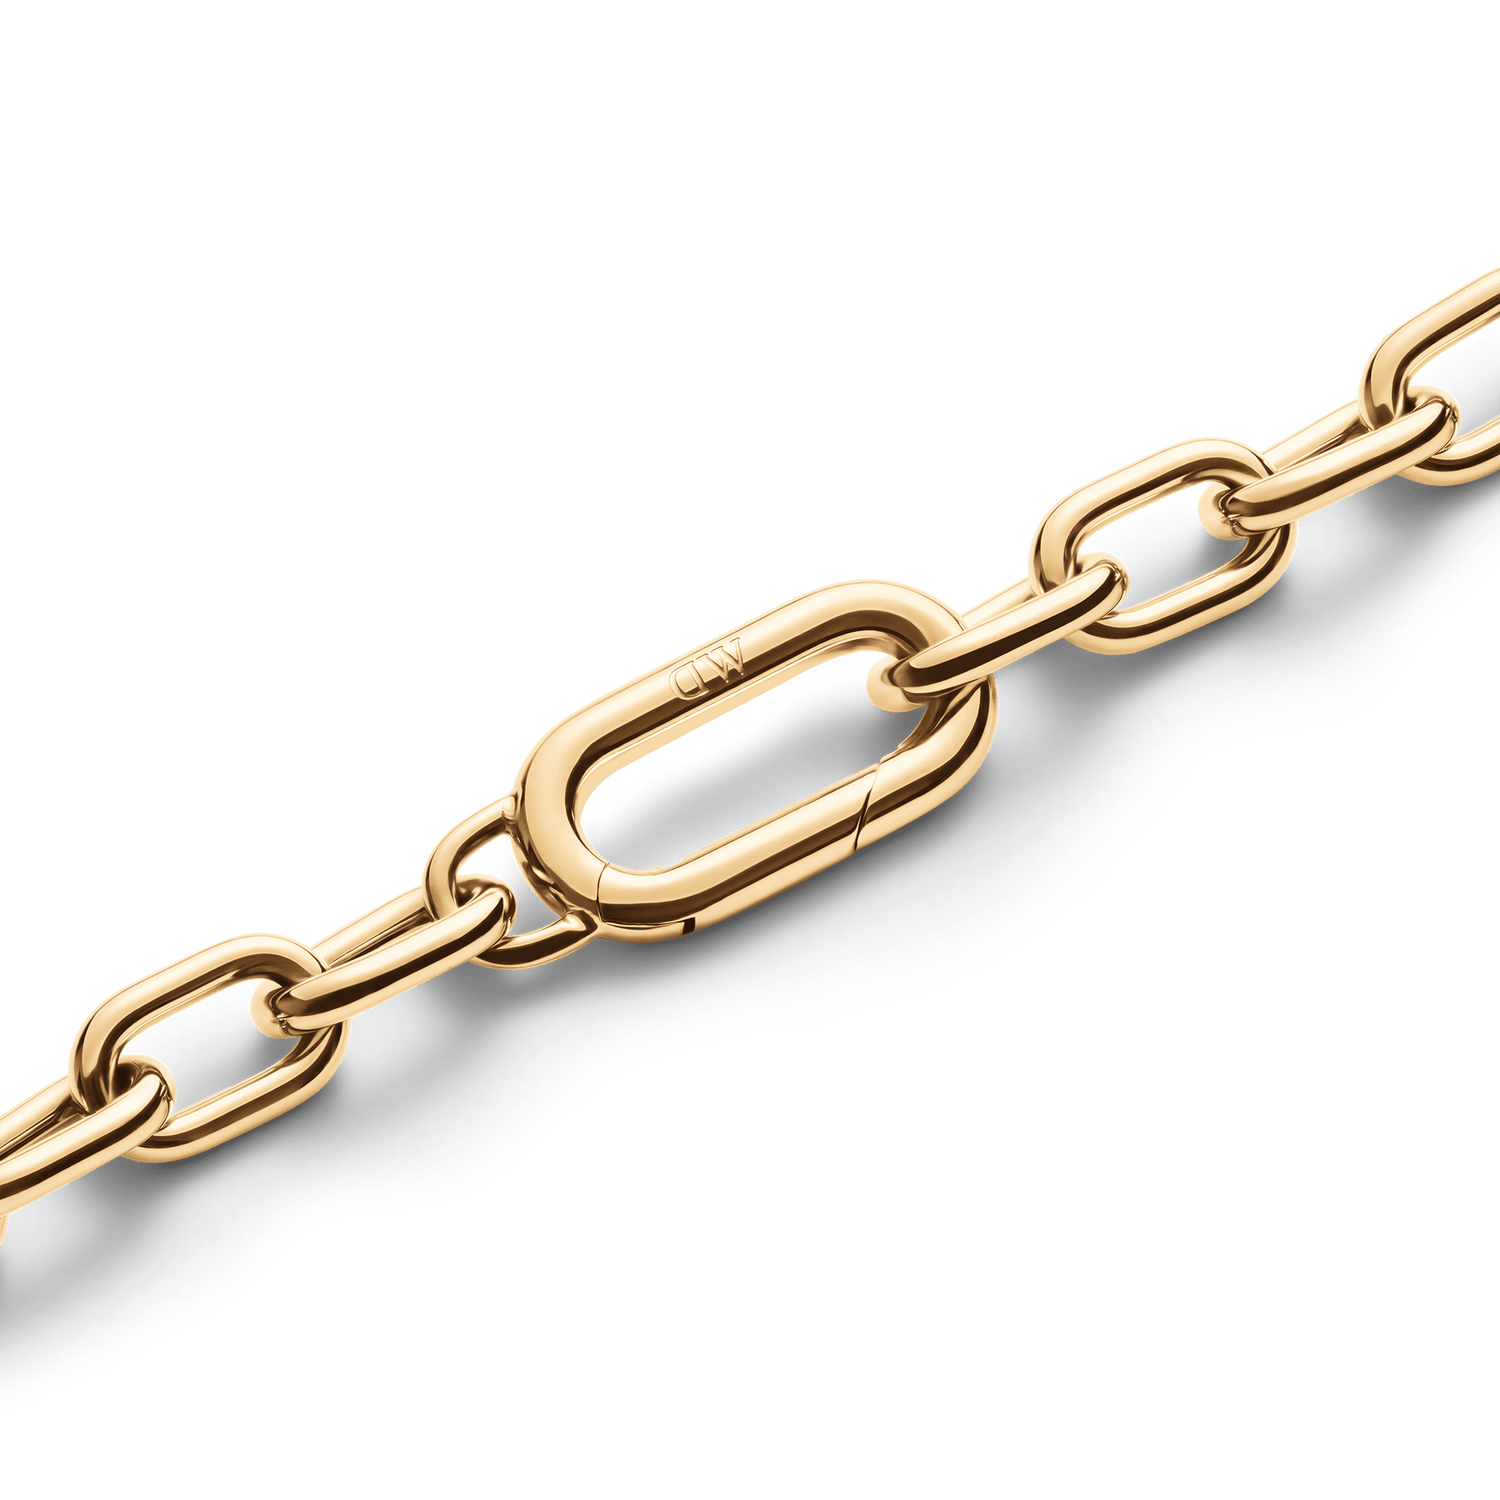 Crystal Link Necklace Gold